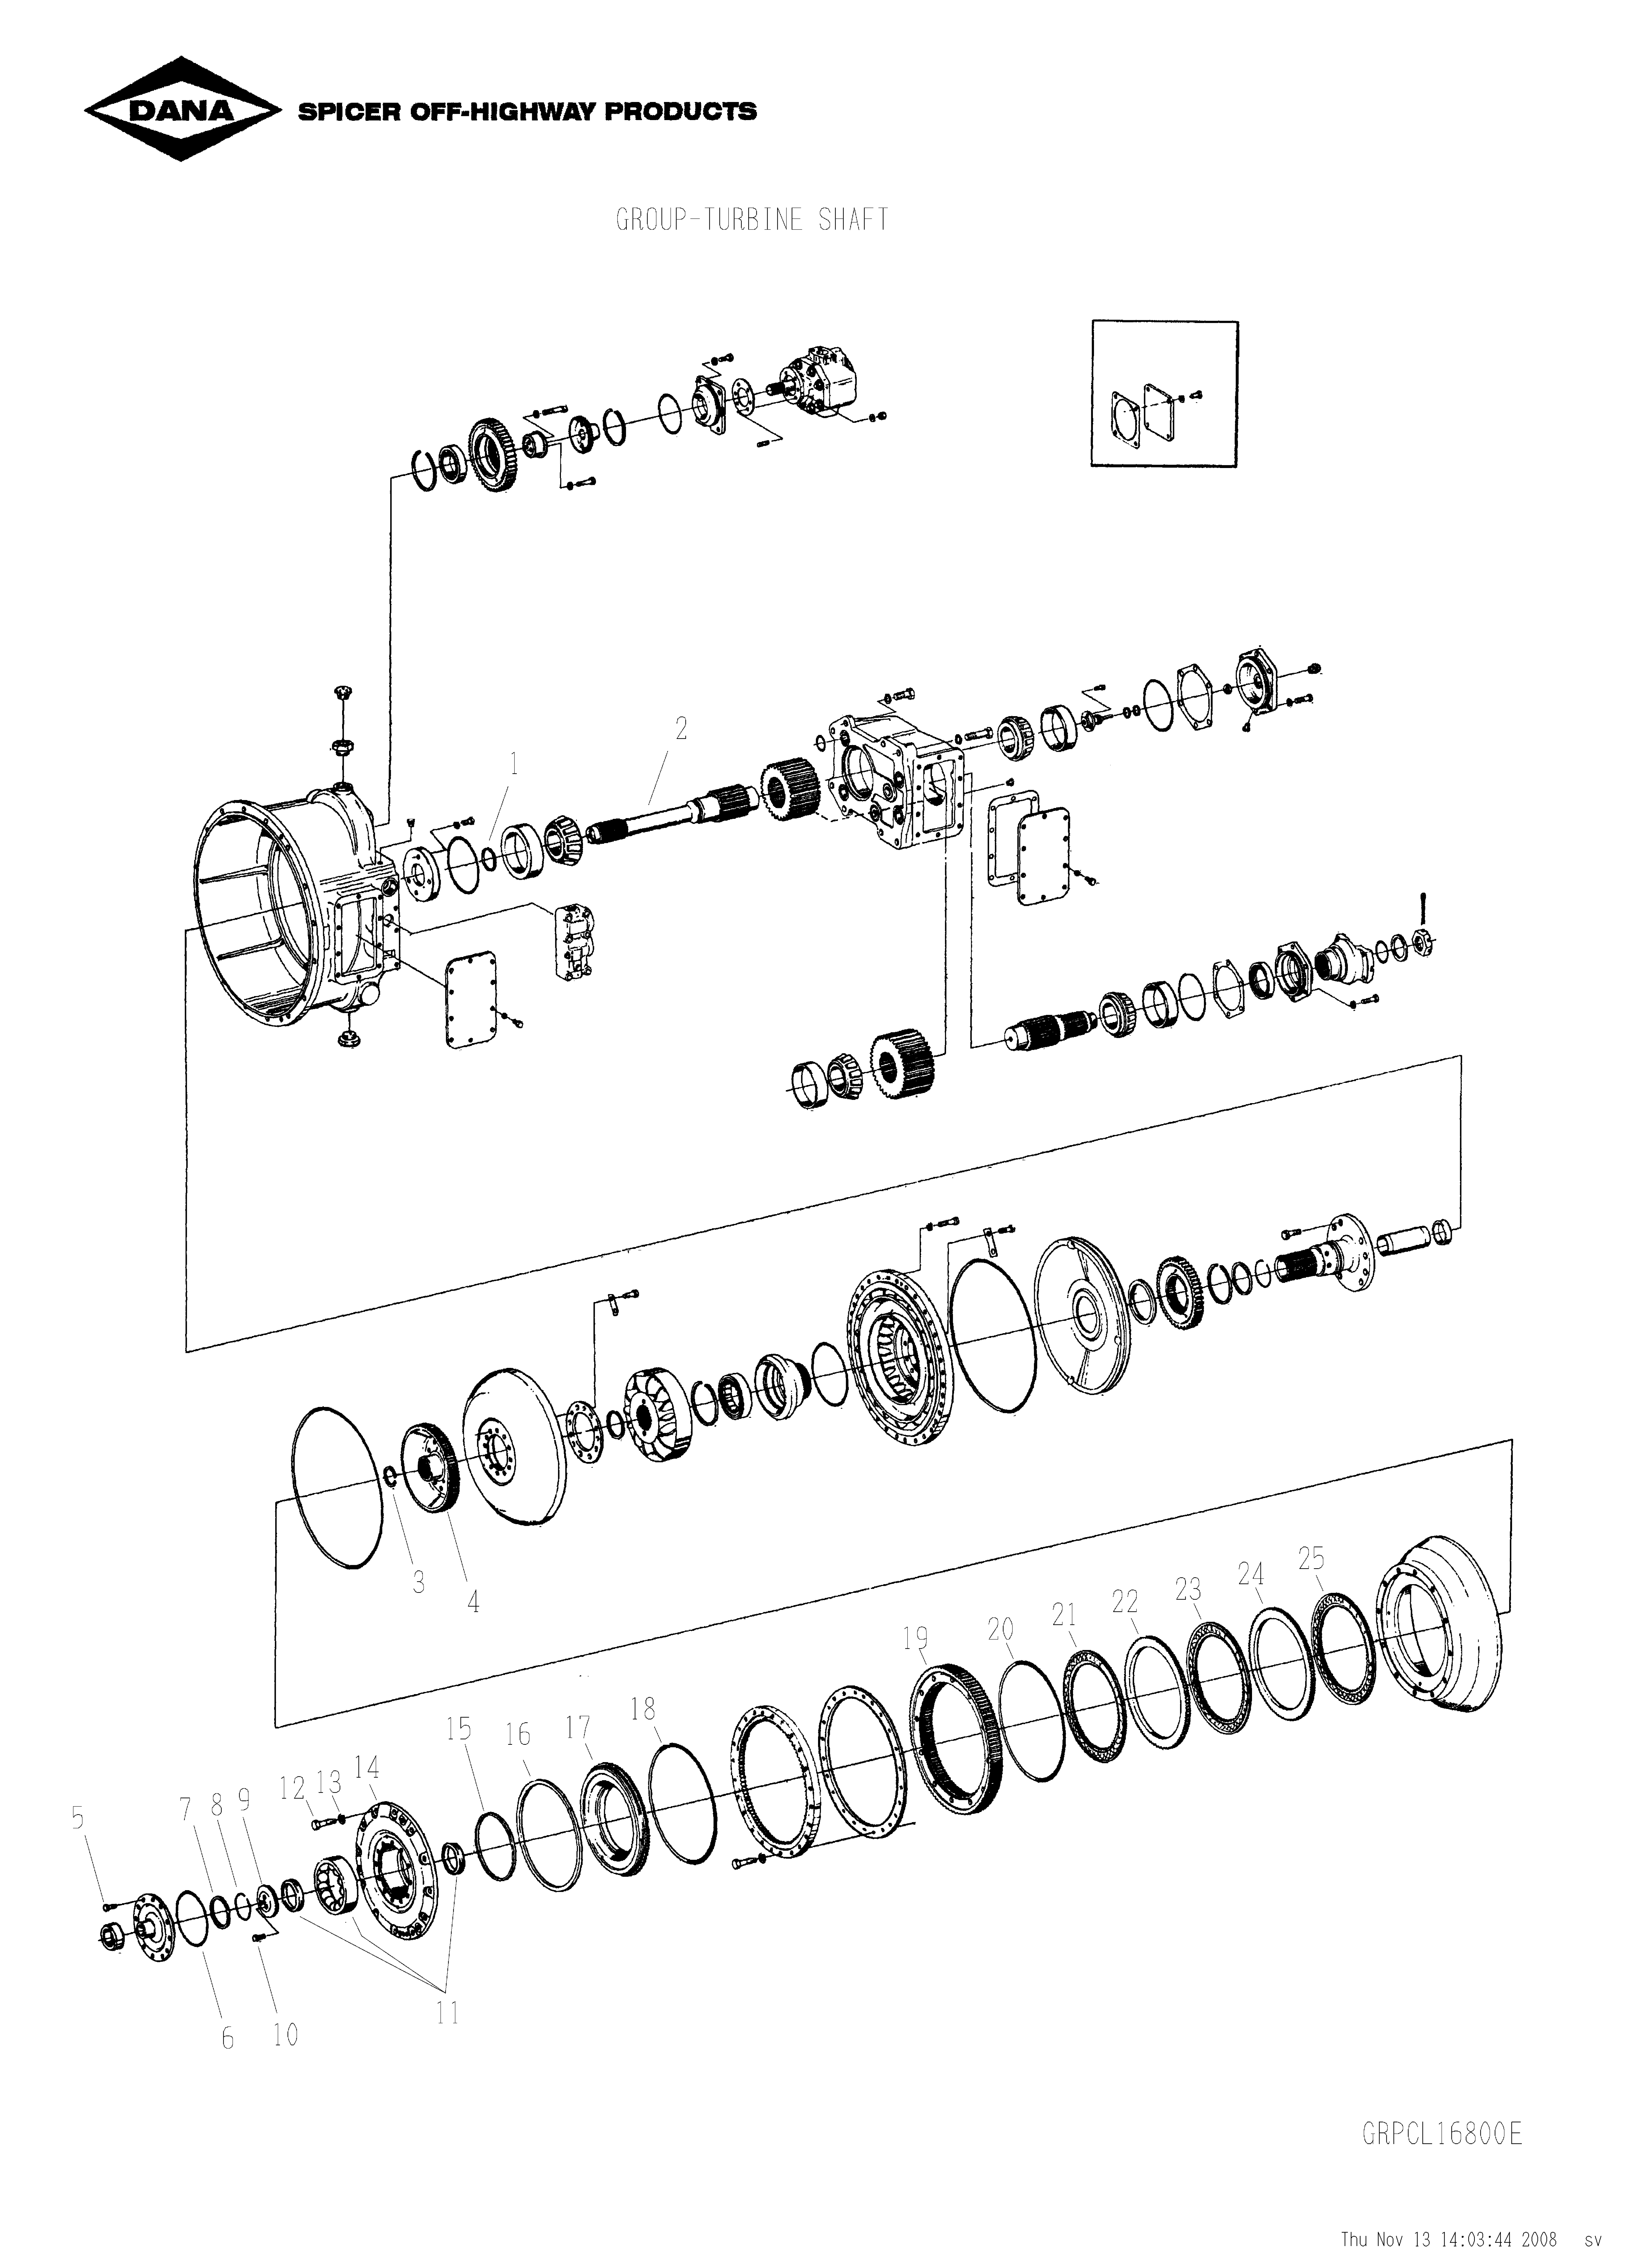 drawing for SCHOEMA, SCHOETTLER MASCHINENFABRIK K24.000092 - SPRING-PISTON RING EXPANDER (figure 5)